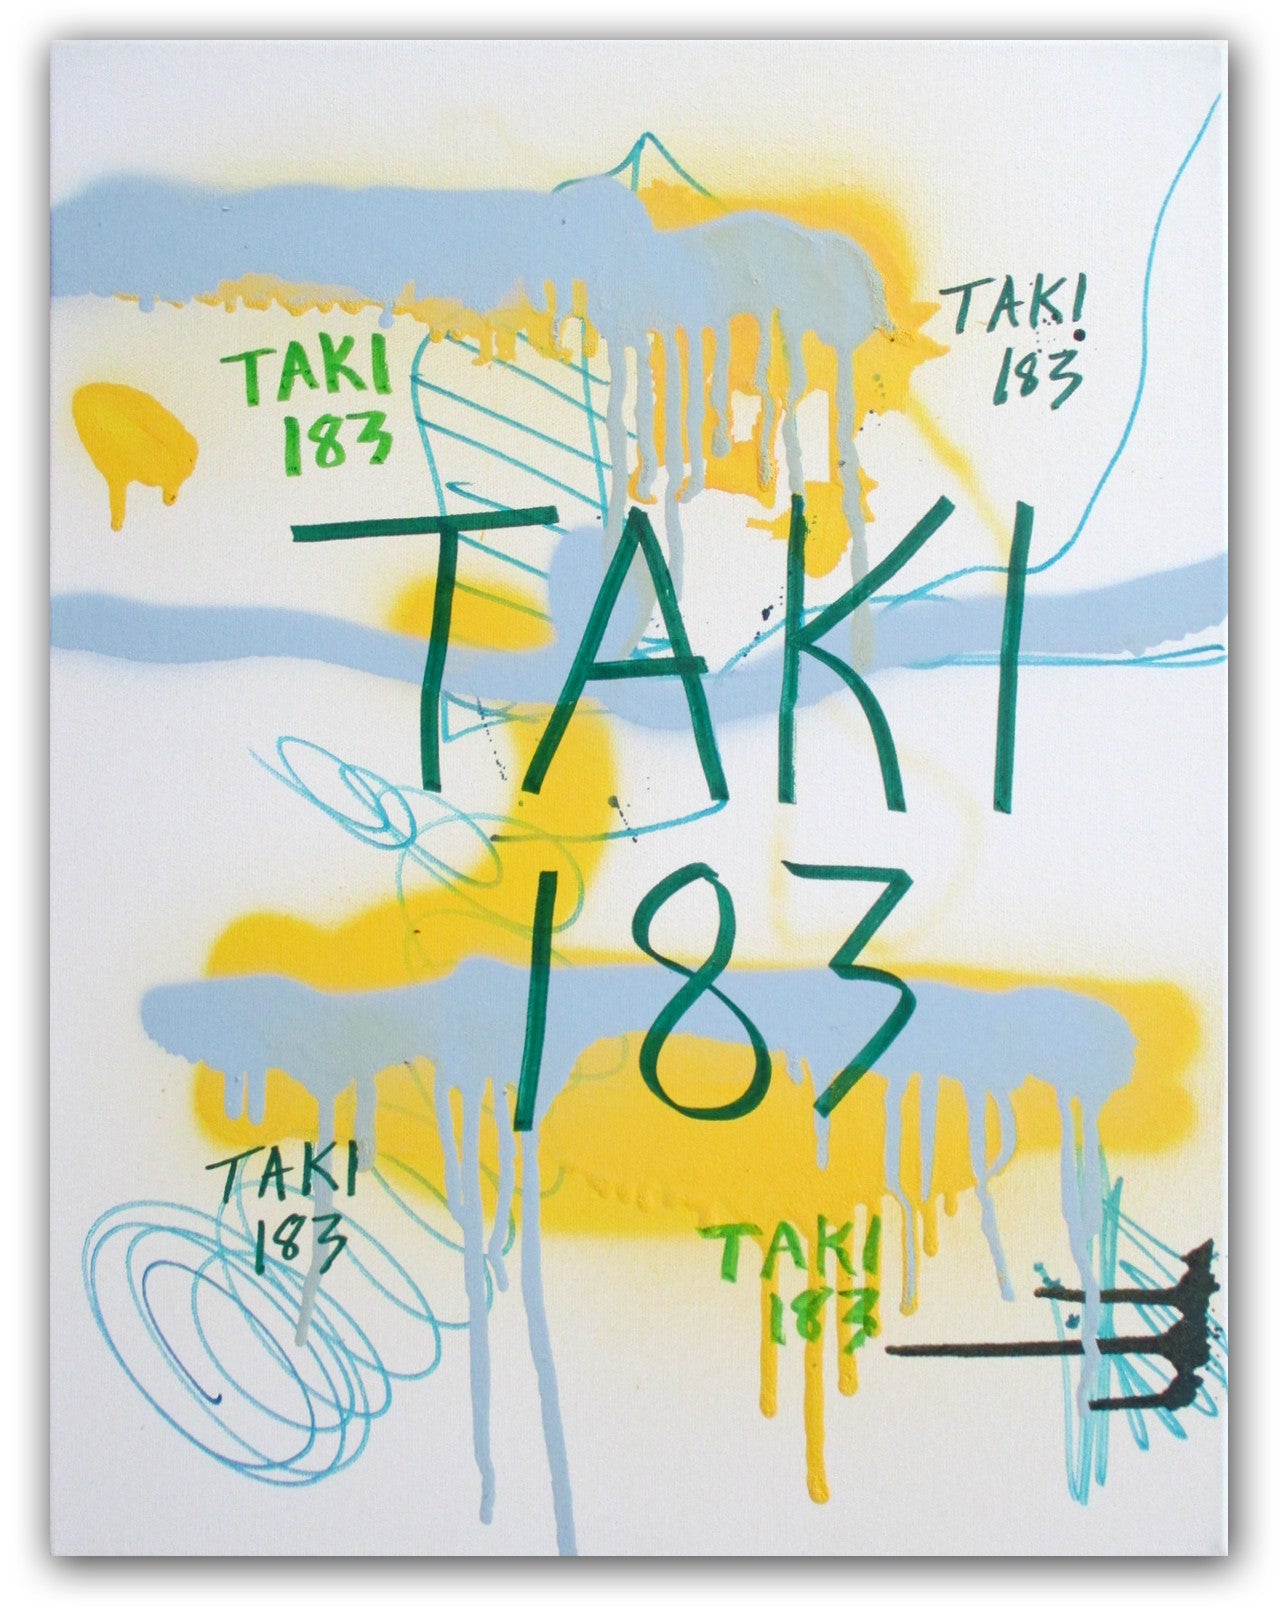 TAKI-183  "Untitled 7" on canvas